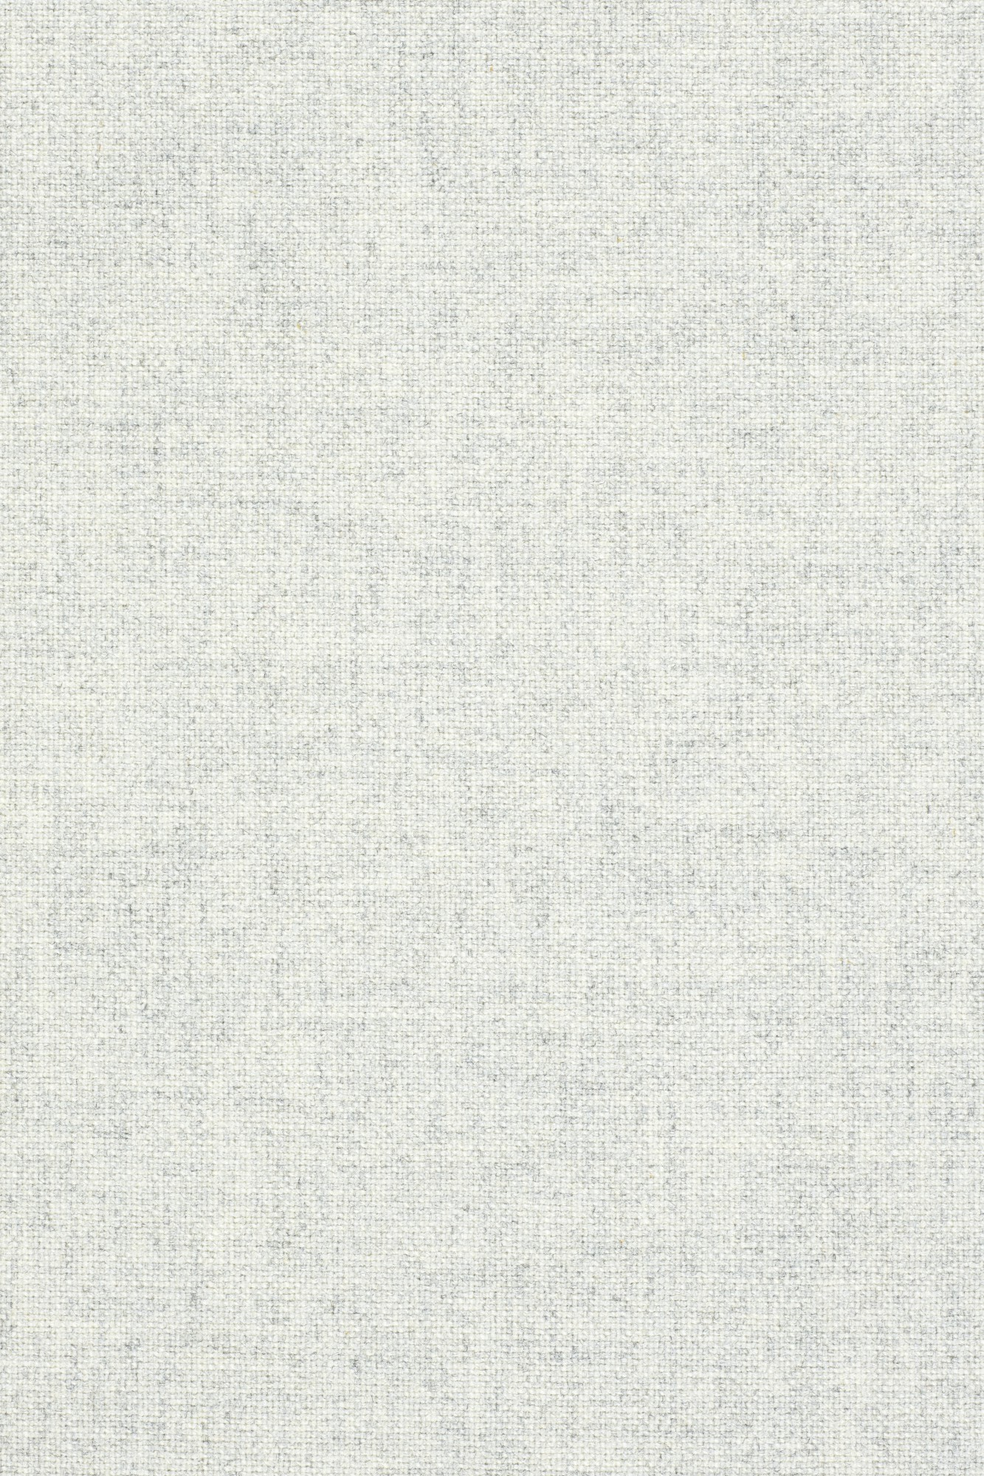 Fabric sample Tonica 2 111 white